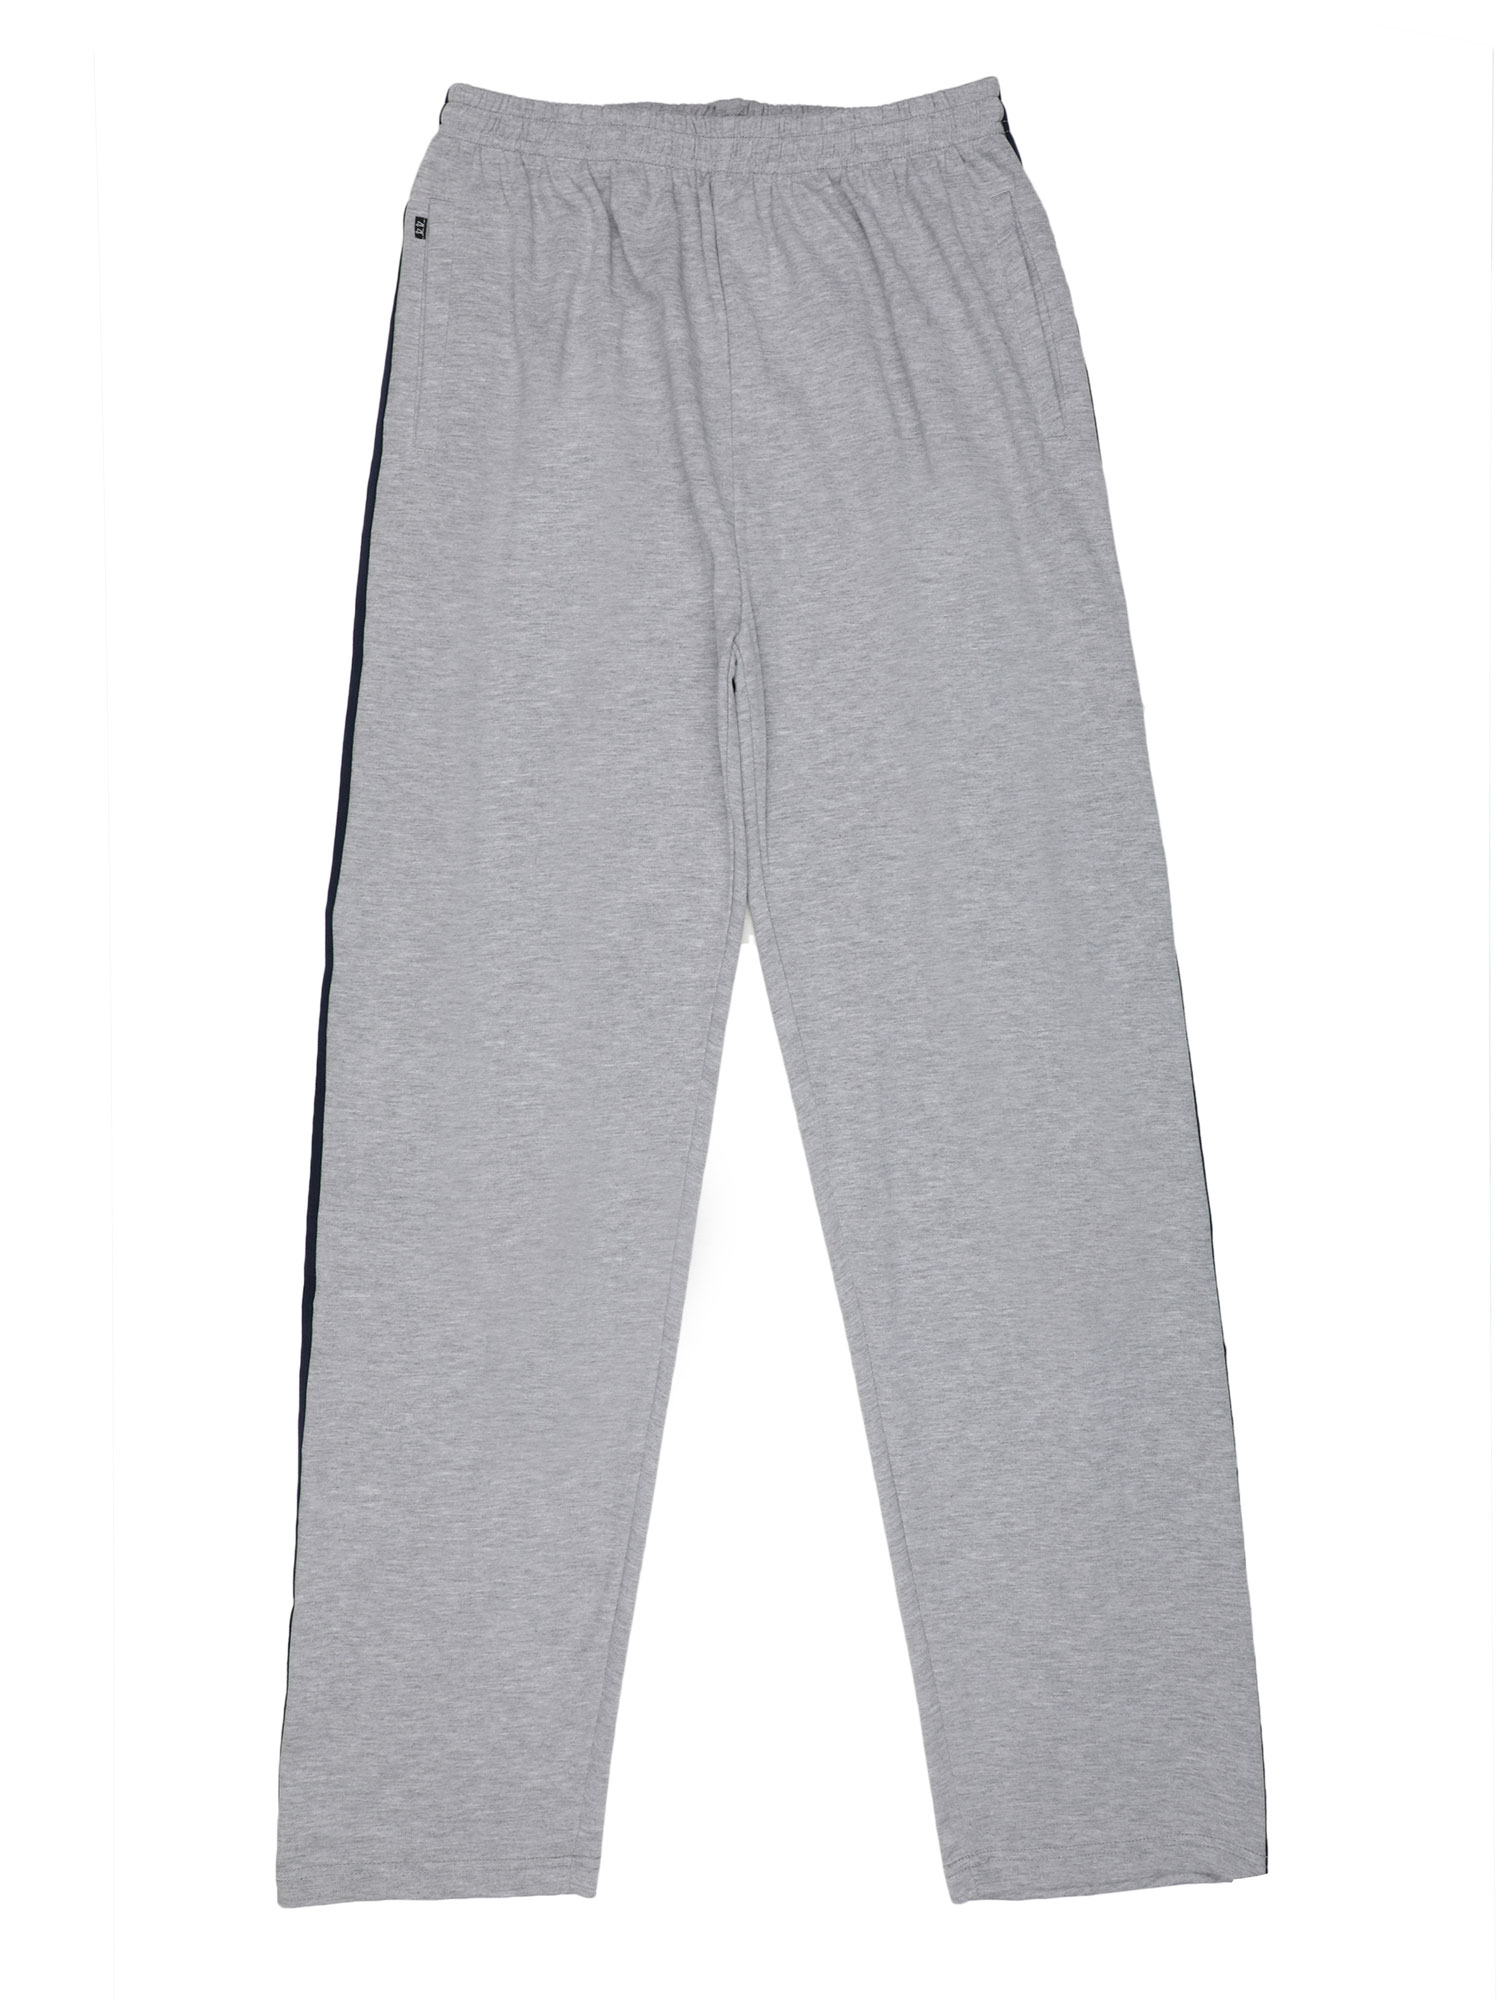 Buy Grey Track Pants for Men by DAMENSCH Online | Ajio.com